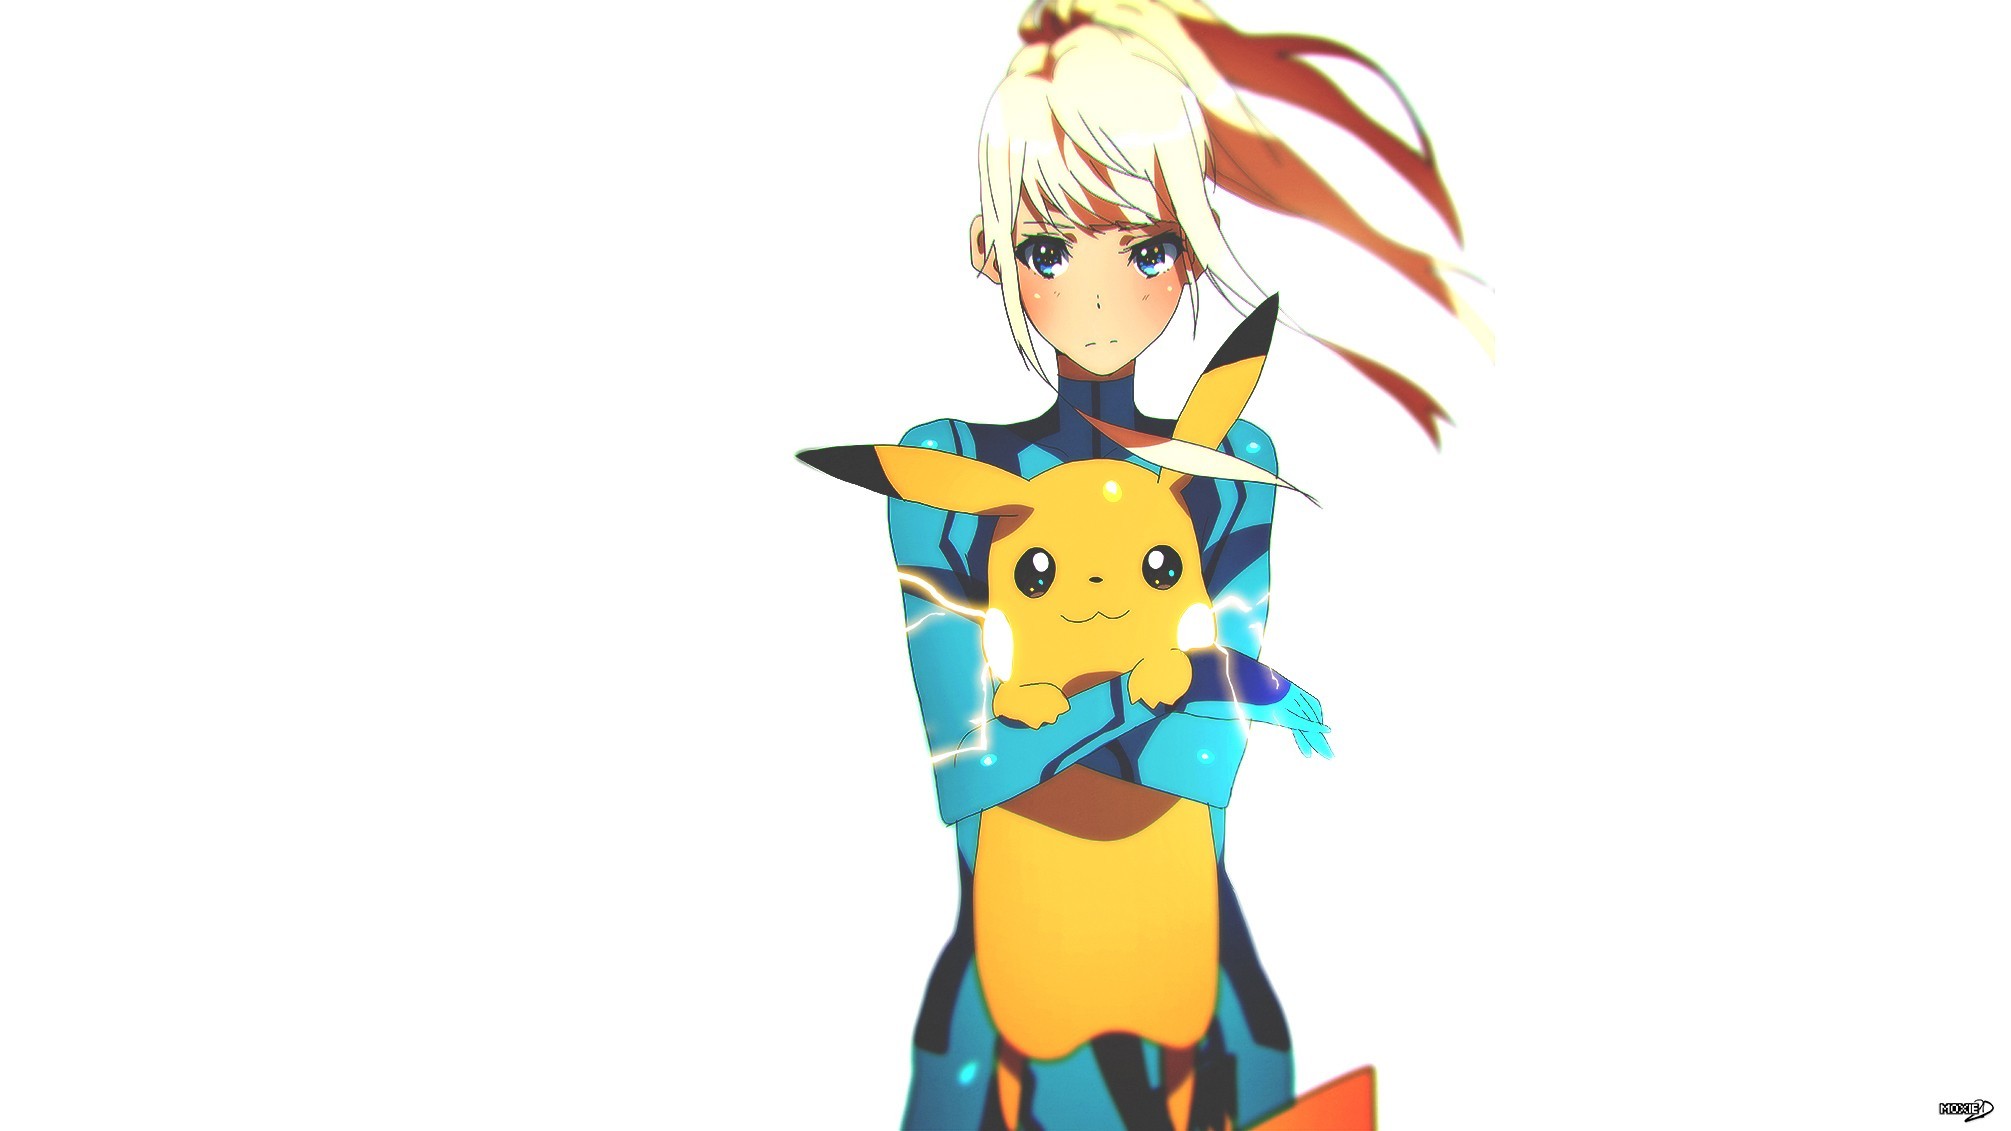 Anime Tom Skender Zero Suit Samus Samus Aran Pikachu PokÃ©mon  Metroid